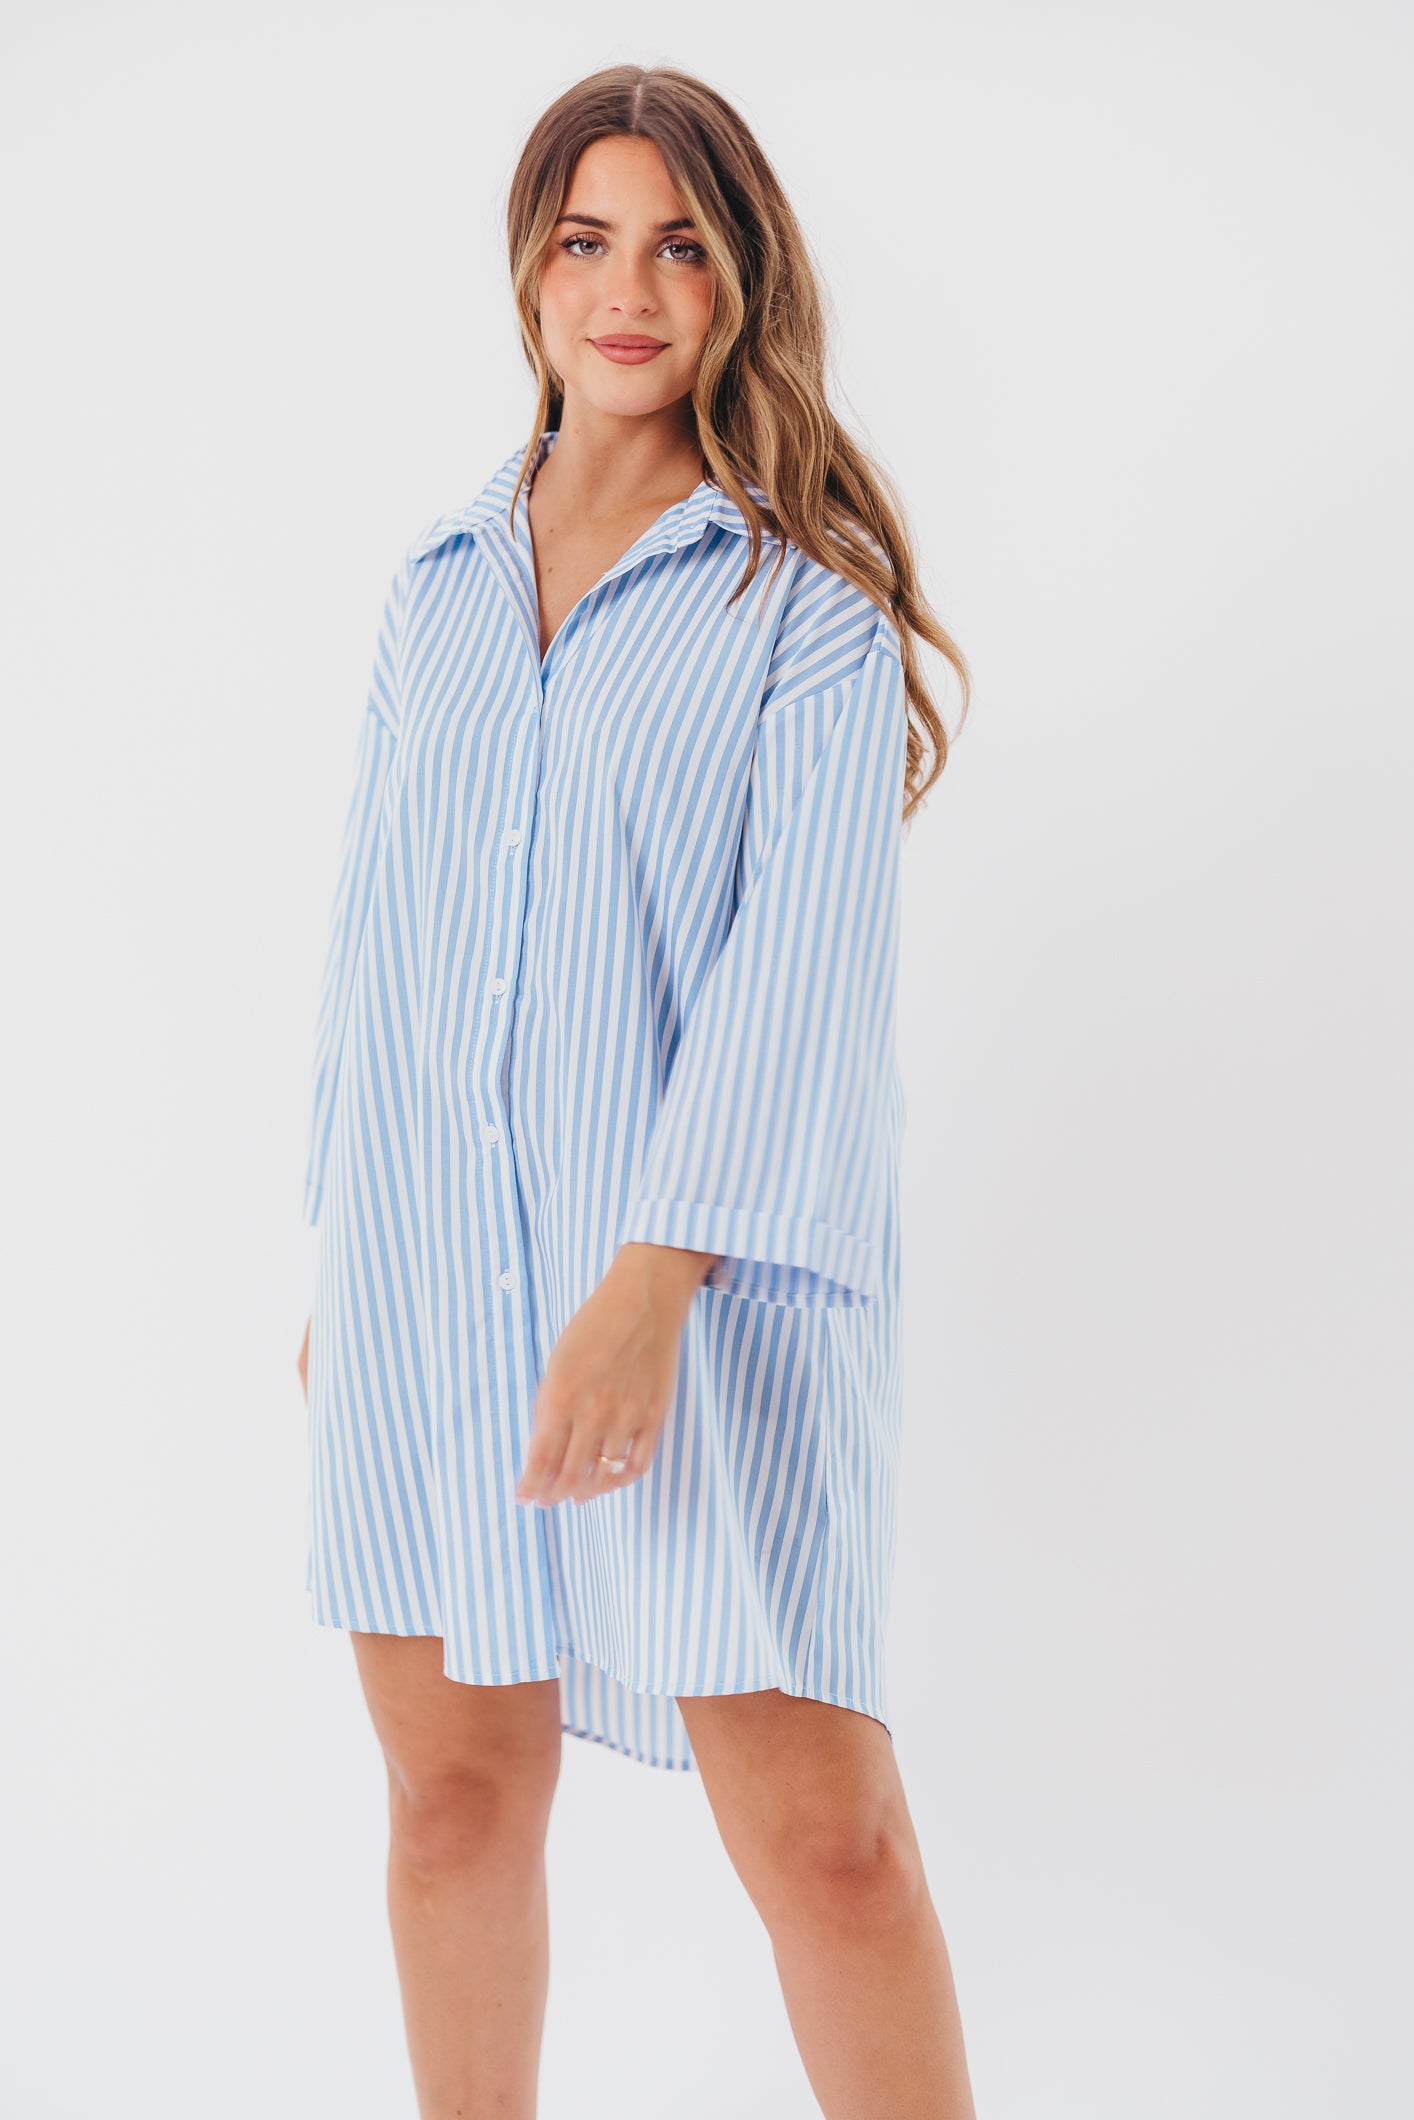 Bellamie Oversized Button-Up Shirt Dress in Sky Blue Stripe - Nursing Friendly